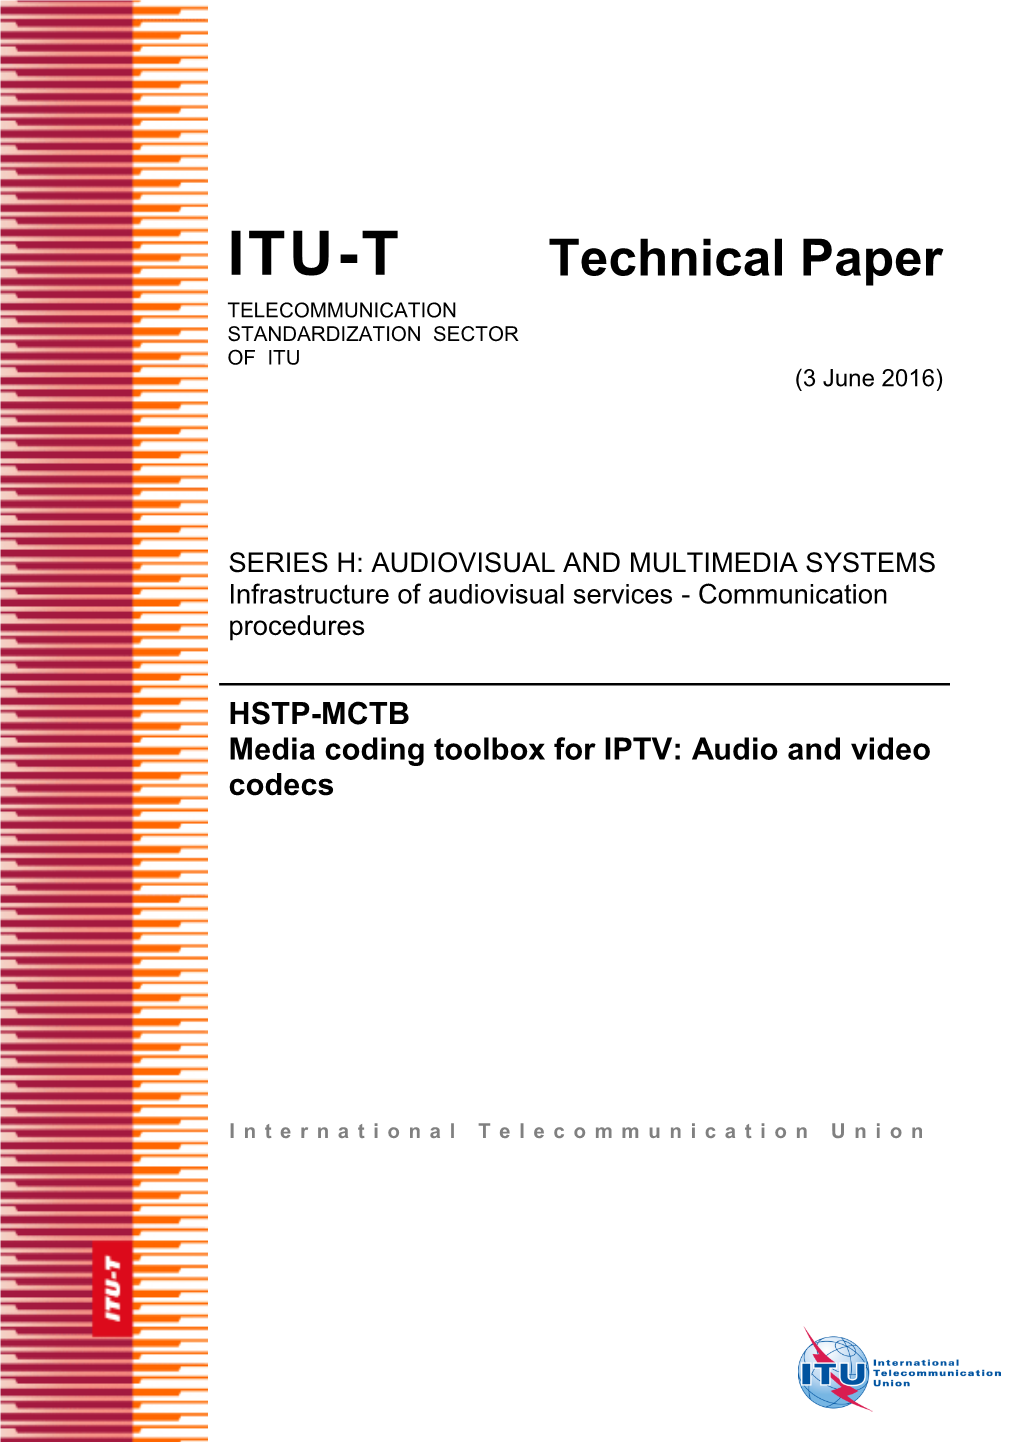 ITU-T Technical Paper HSTP-MCTB "Media Coding Toolbox for IPTV